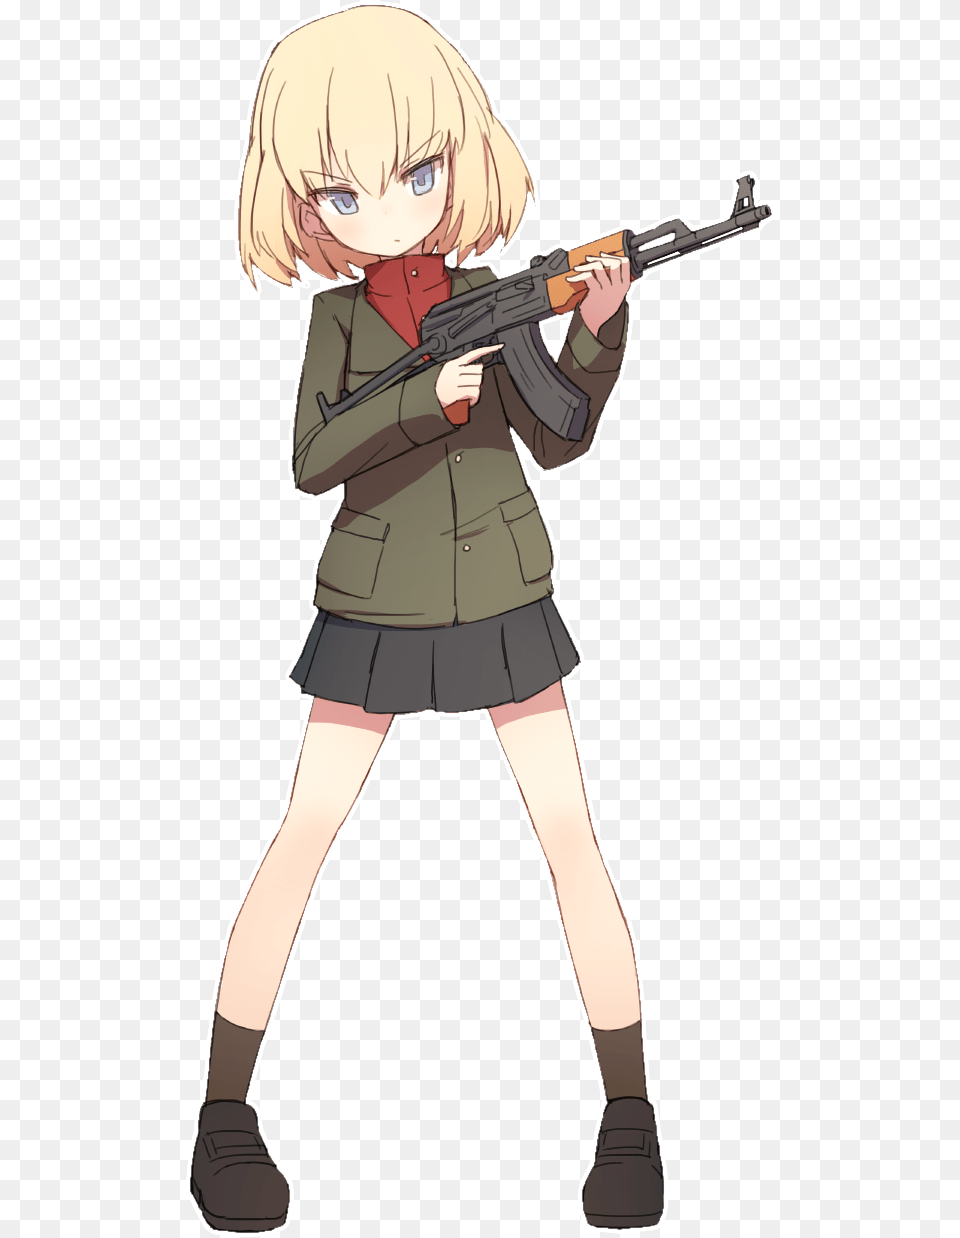 Ak 47 Anime Girl With Gun, Book, Comics, Weapon, Rifle Png